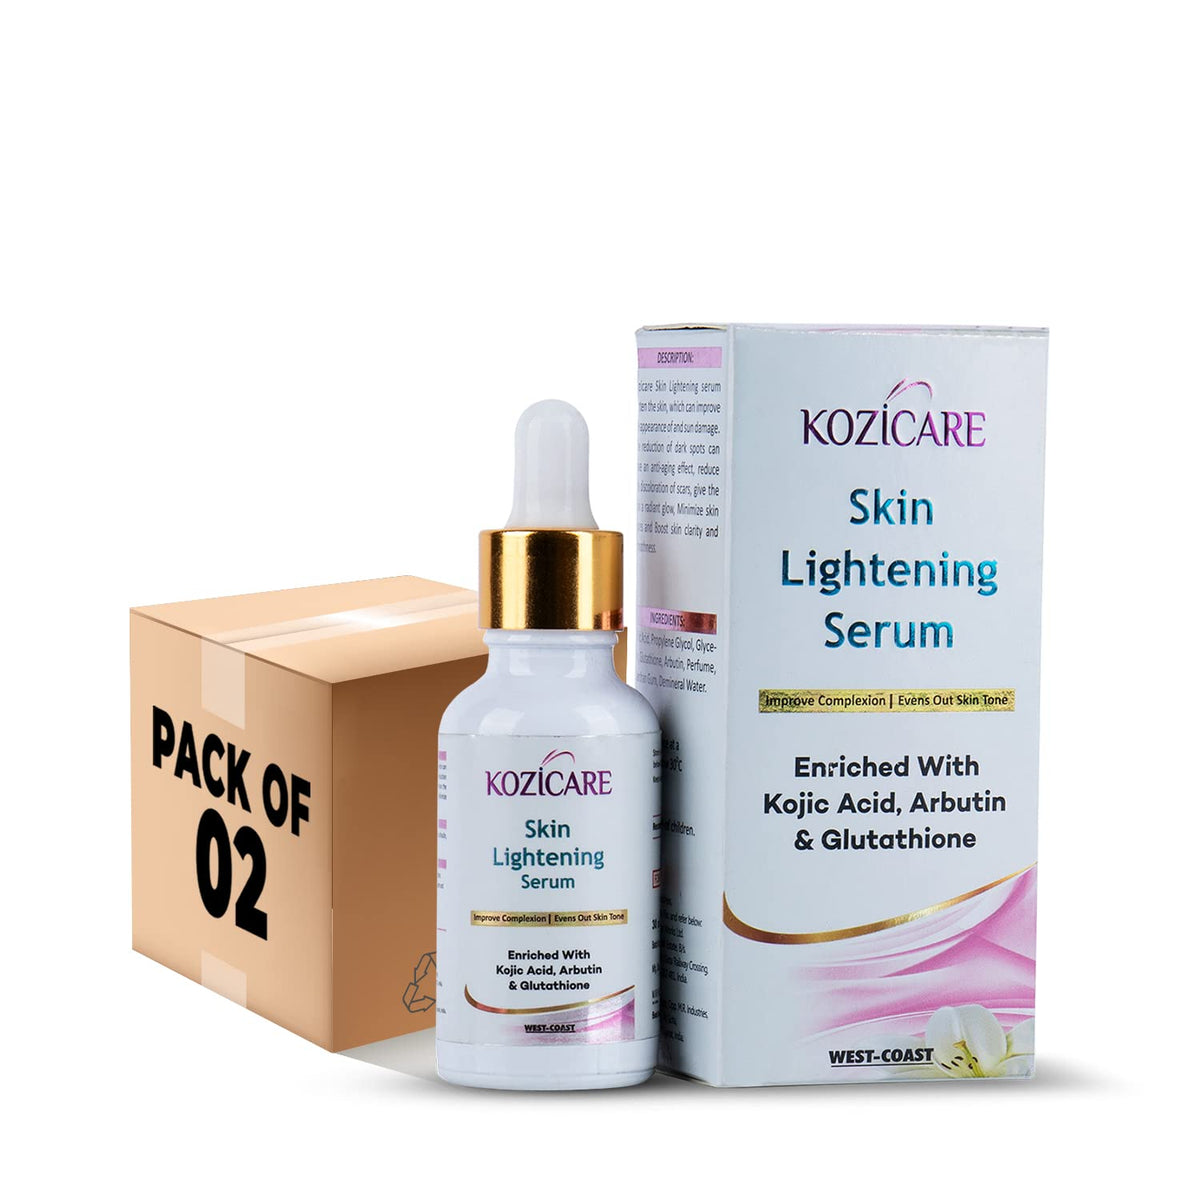 Kozicare Skin Lightening Serum Enriched With Kojic Acid, Arbutin and Glutathione | Maximum Strength Brightening for Face, Neck & Body – Dark Spots, Hyperpigmentation - 30ml (Pack of 2)